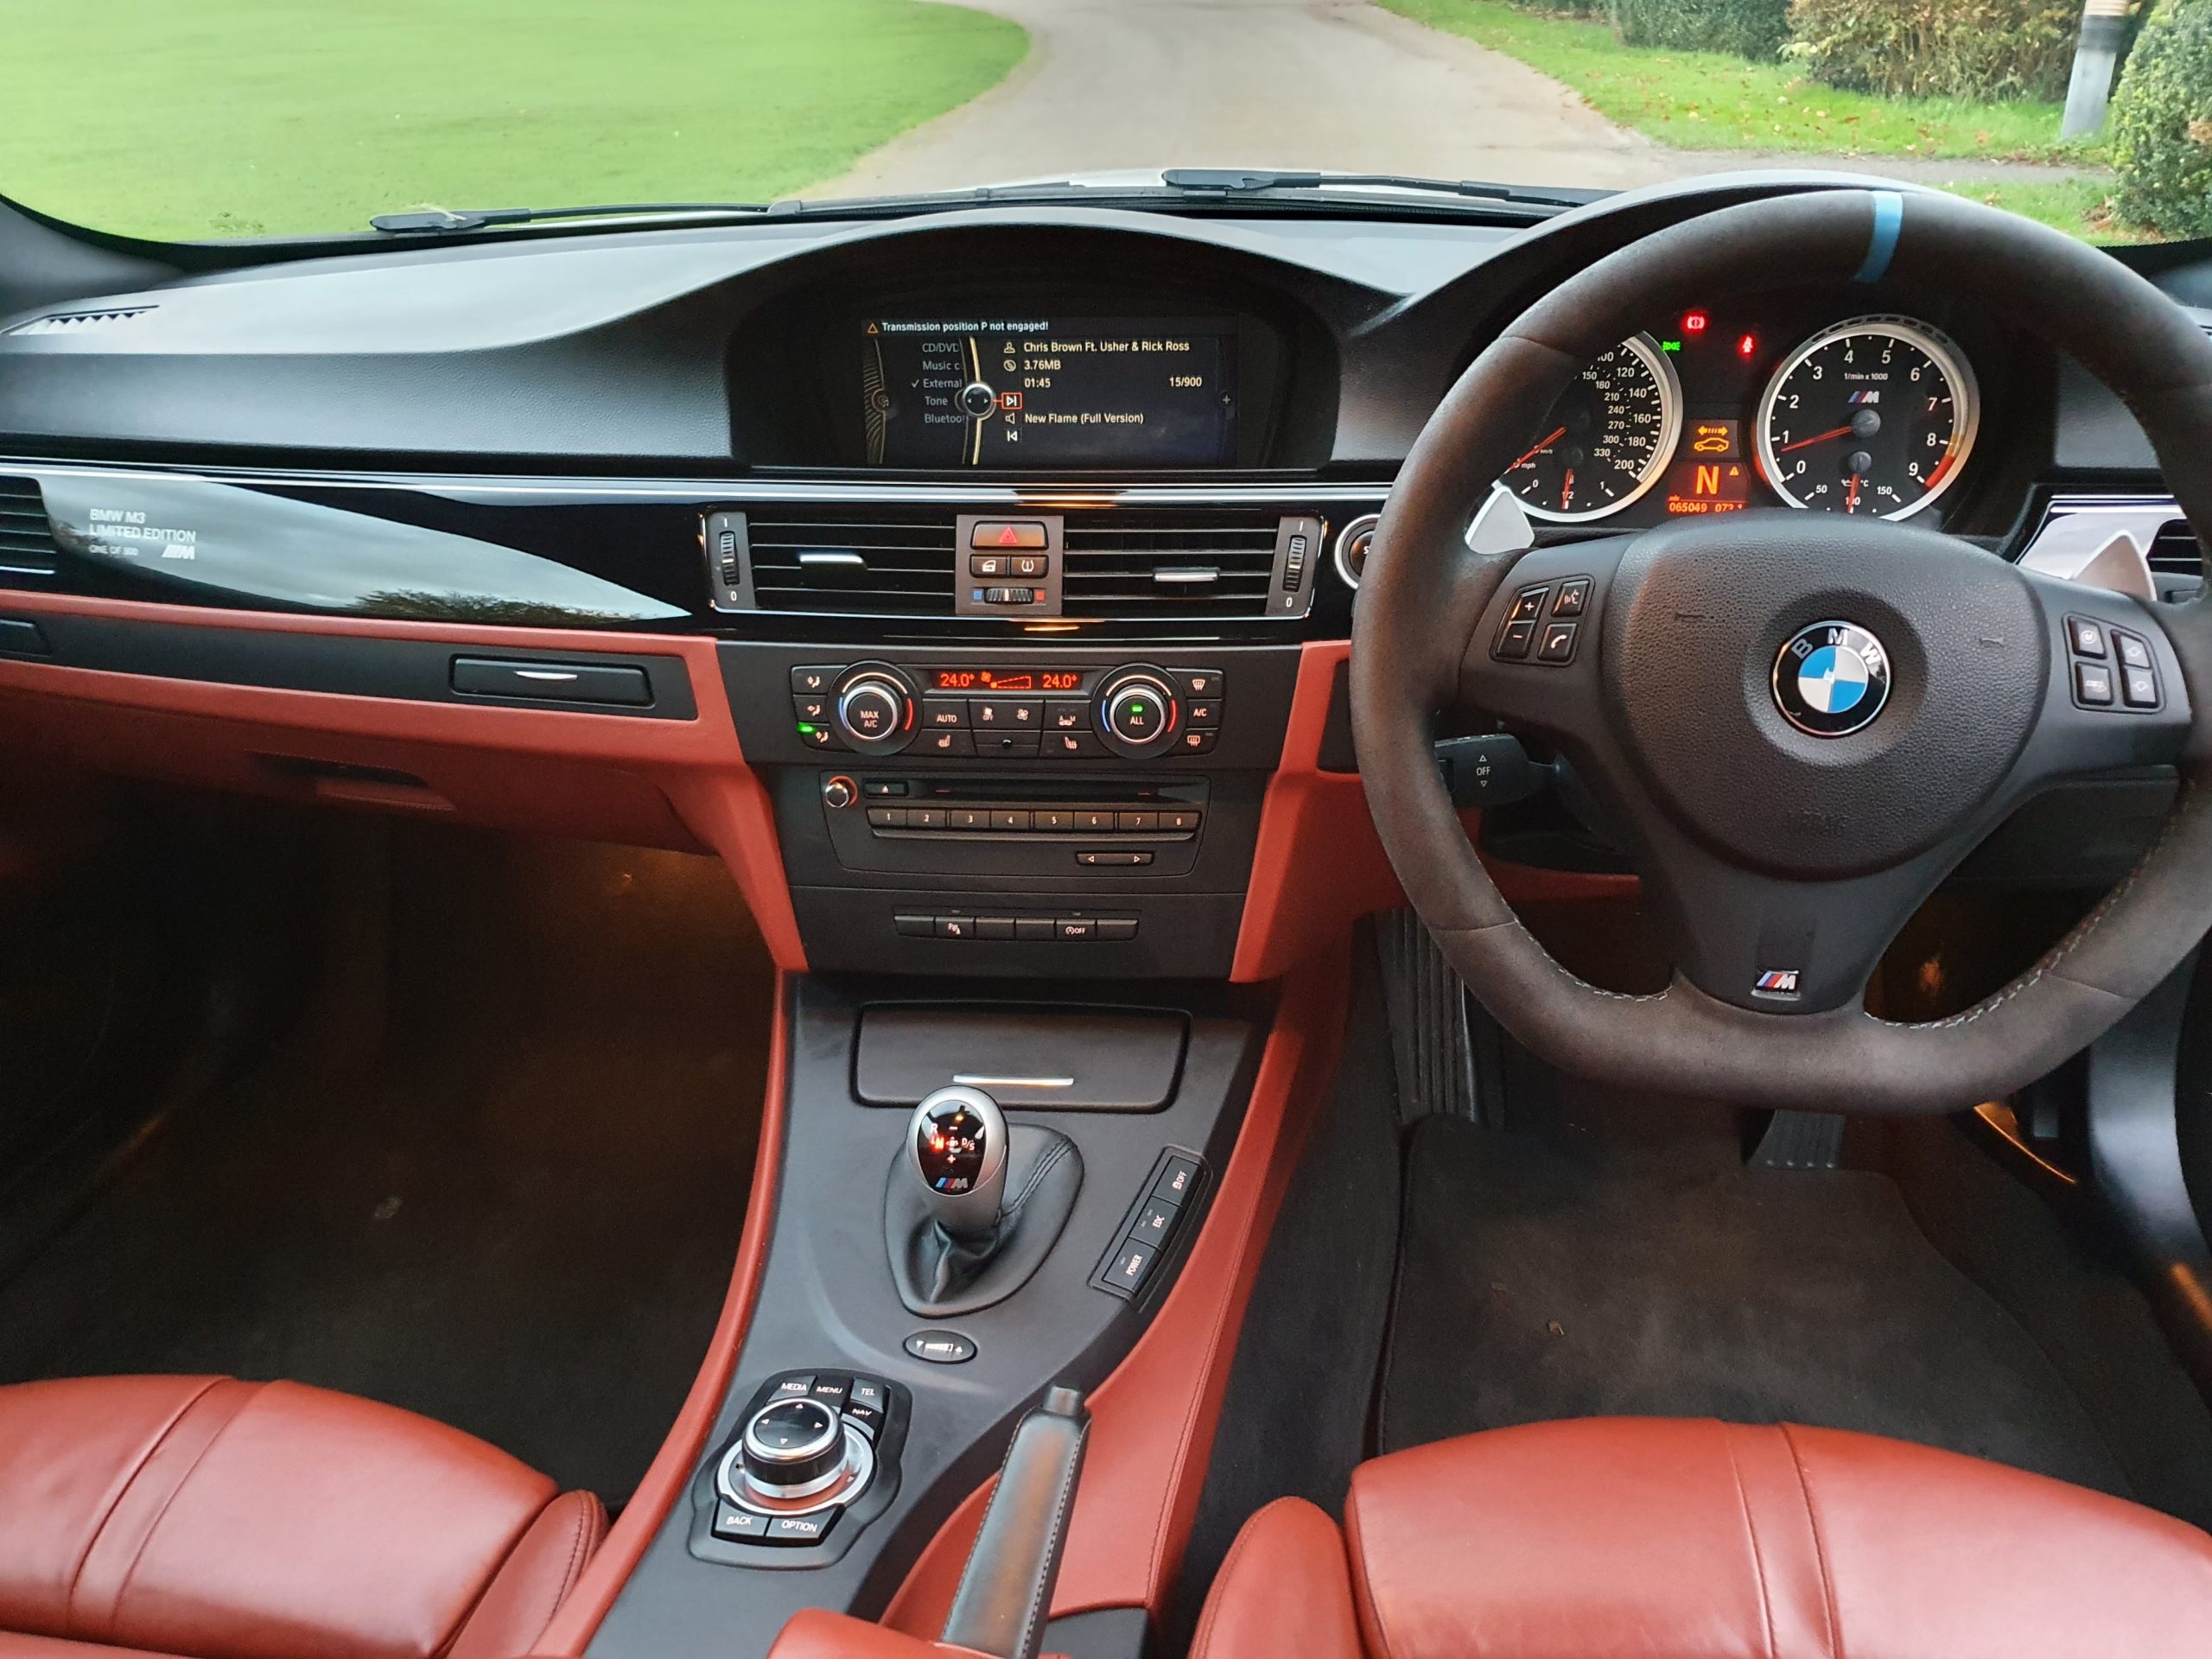 BMW E92 M3 Limited Edition 500